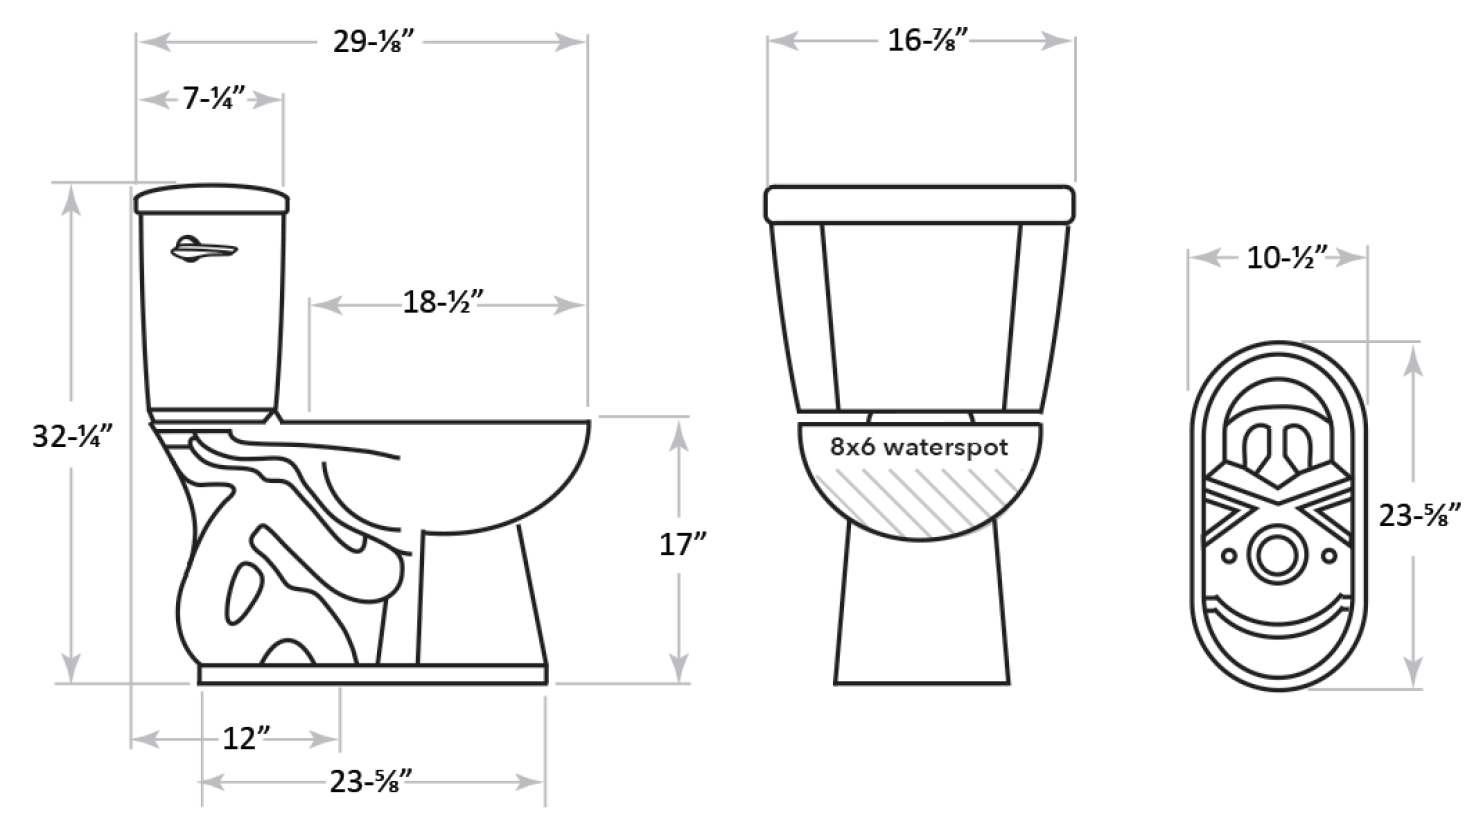 Sabre elongated ADA toilet technical info